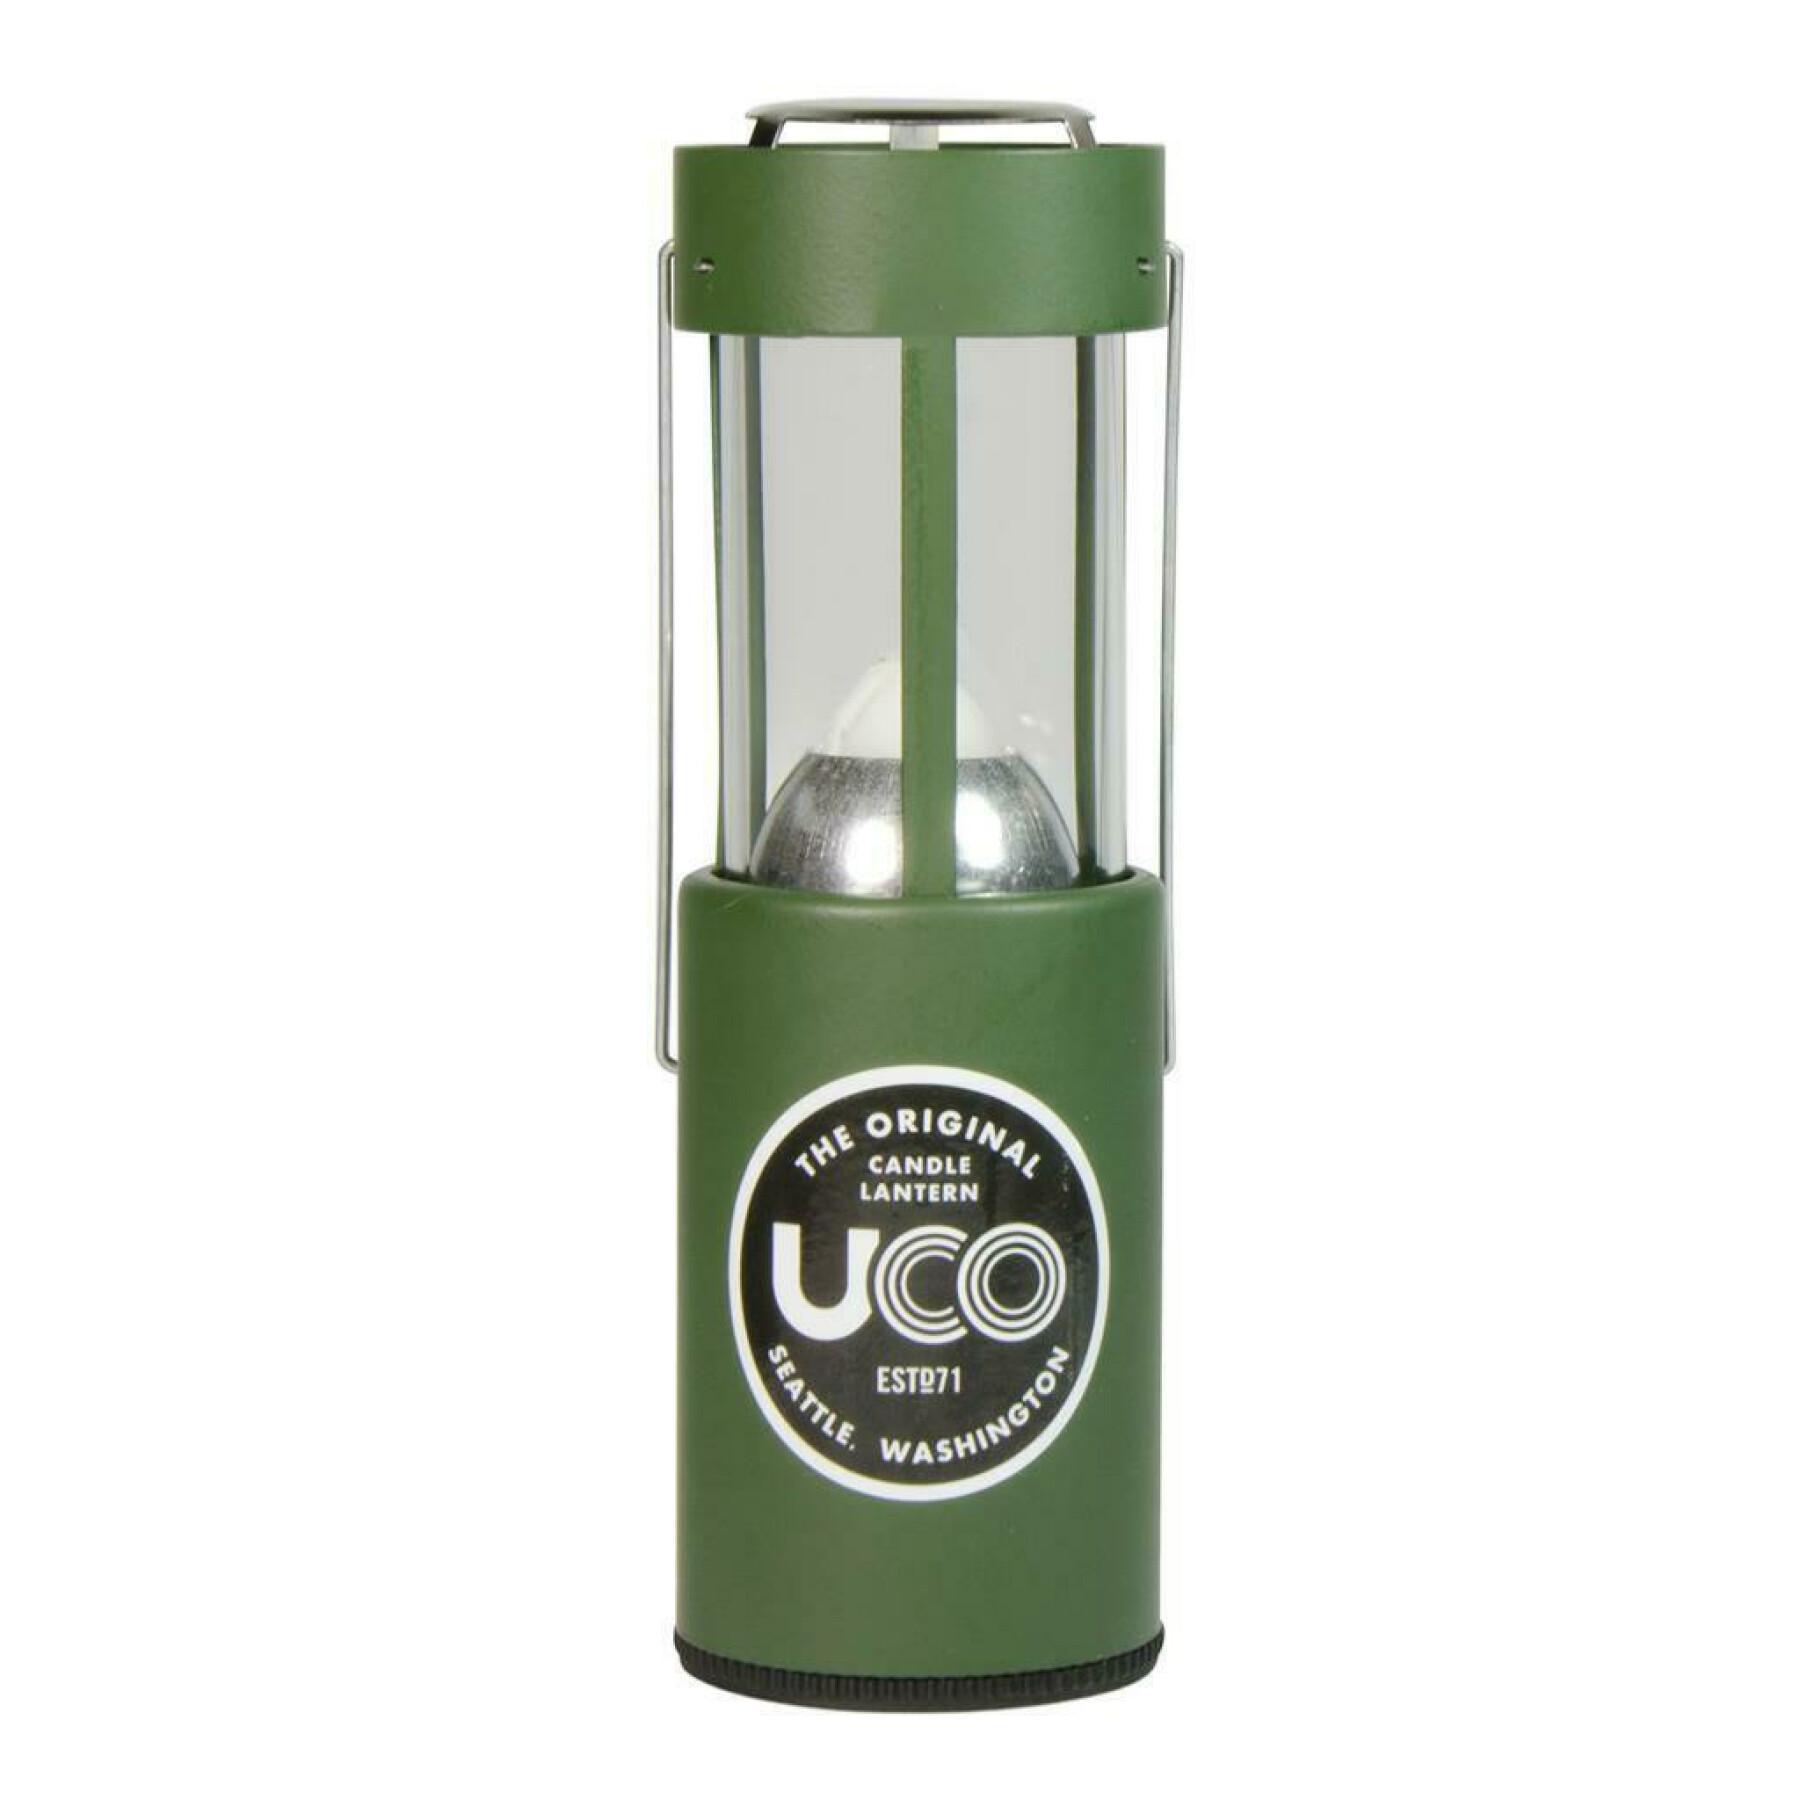 Retractable lantern + long-life candle Uco original lantern v